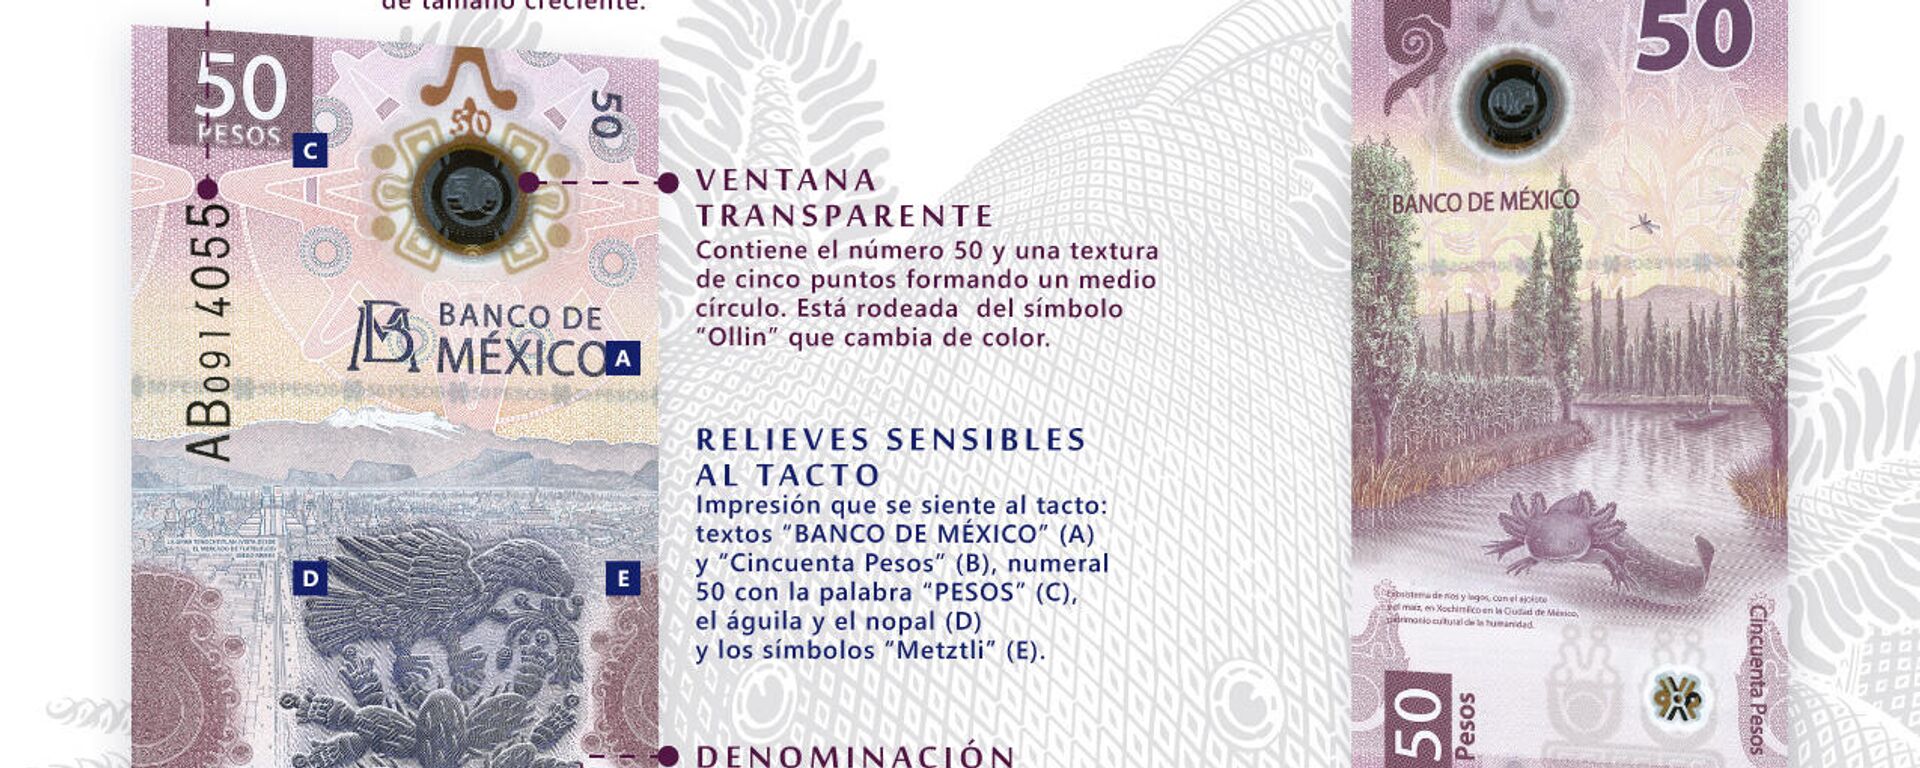 Nuevo billete de 50 pesos del Banco de México - Sputnik Mundo, 1920, 28.10.2021